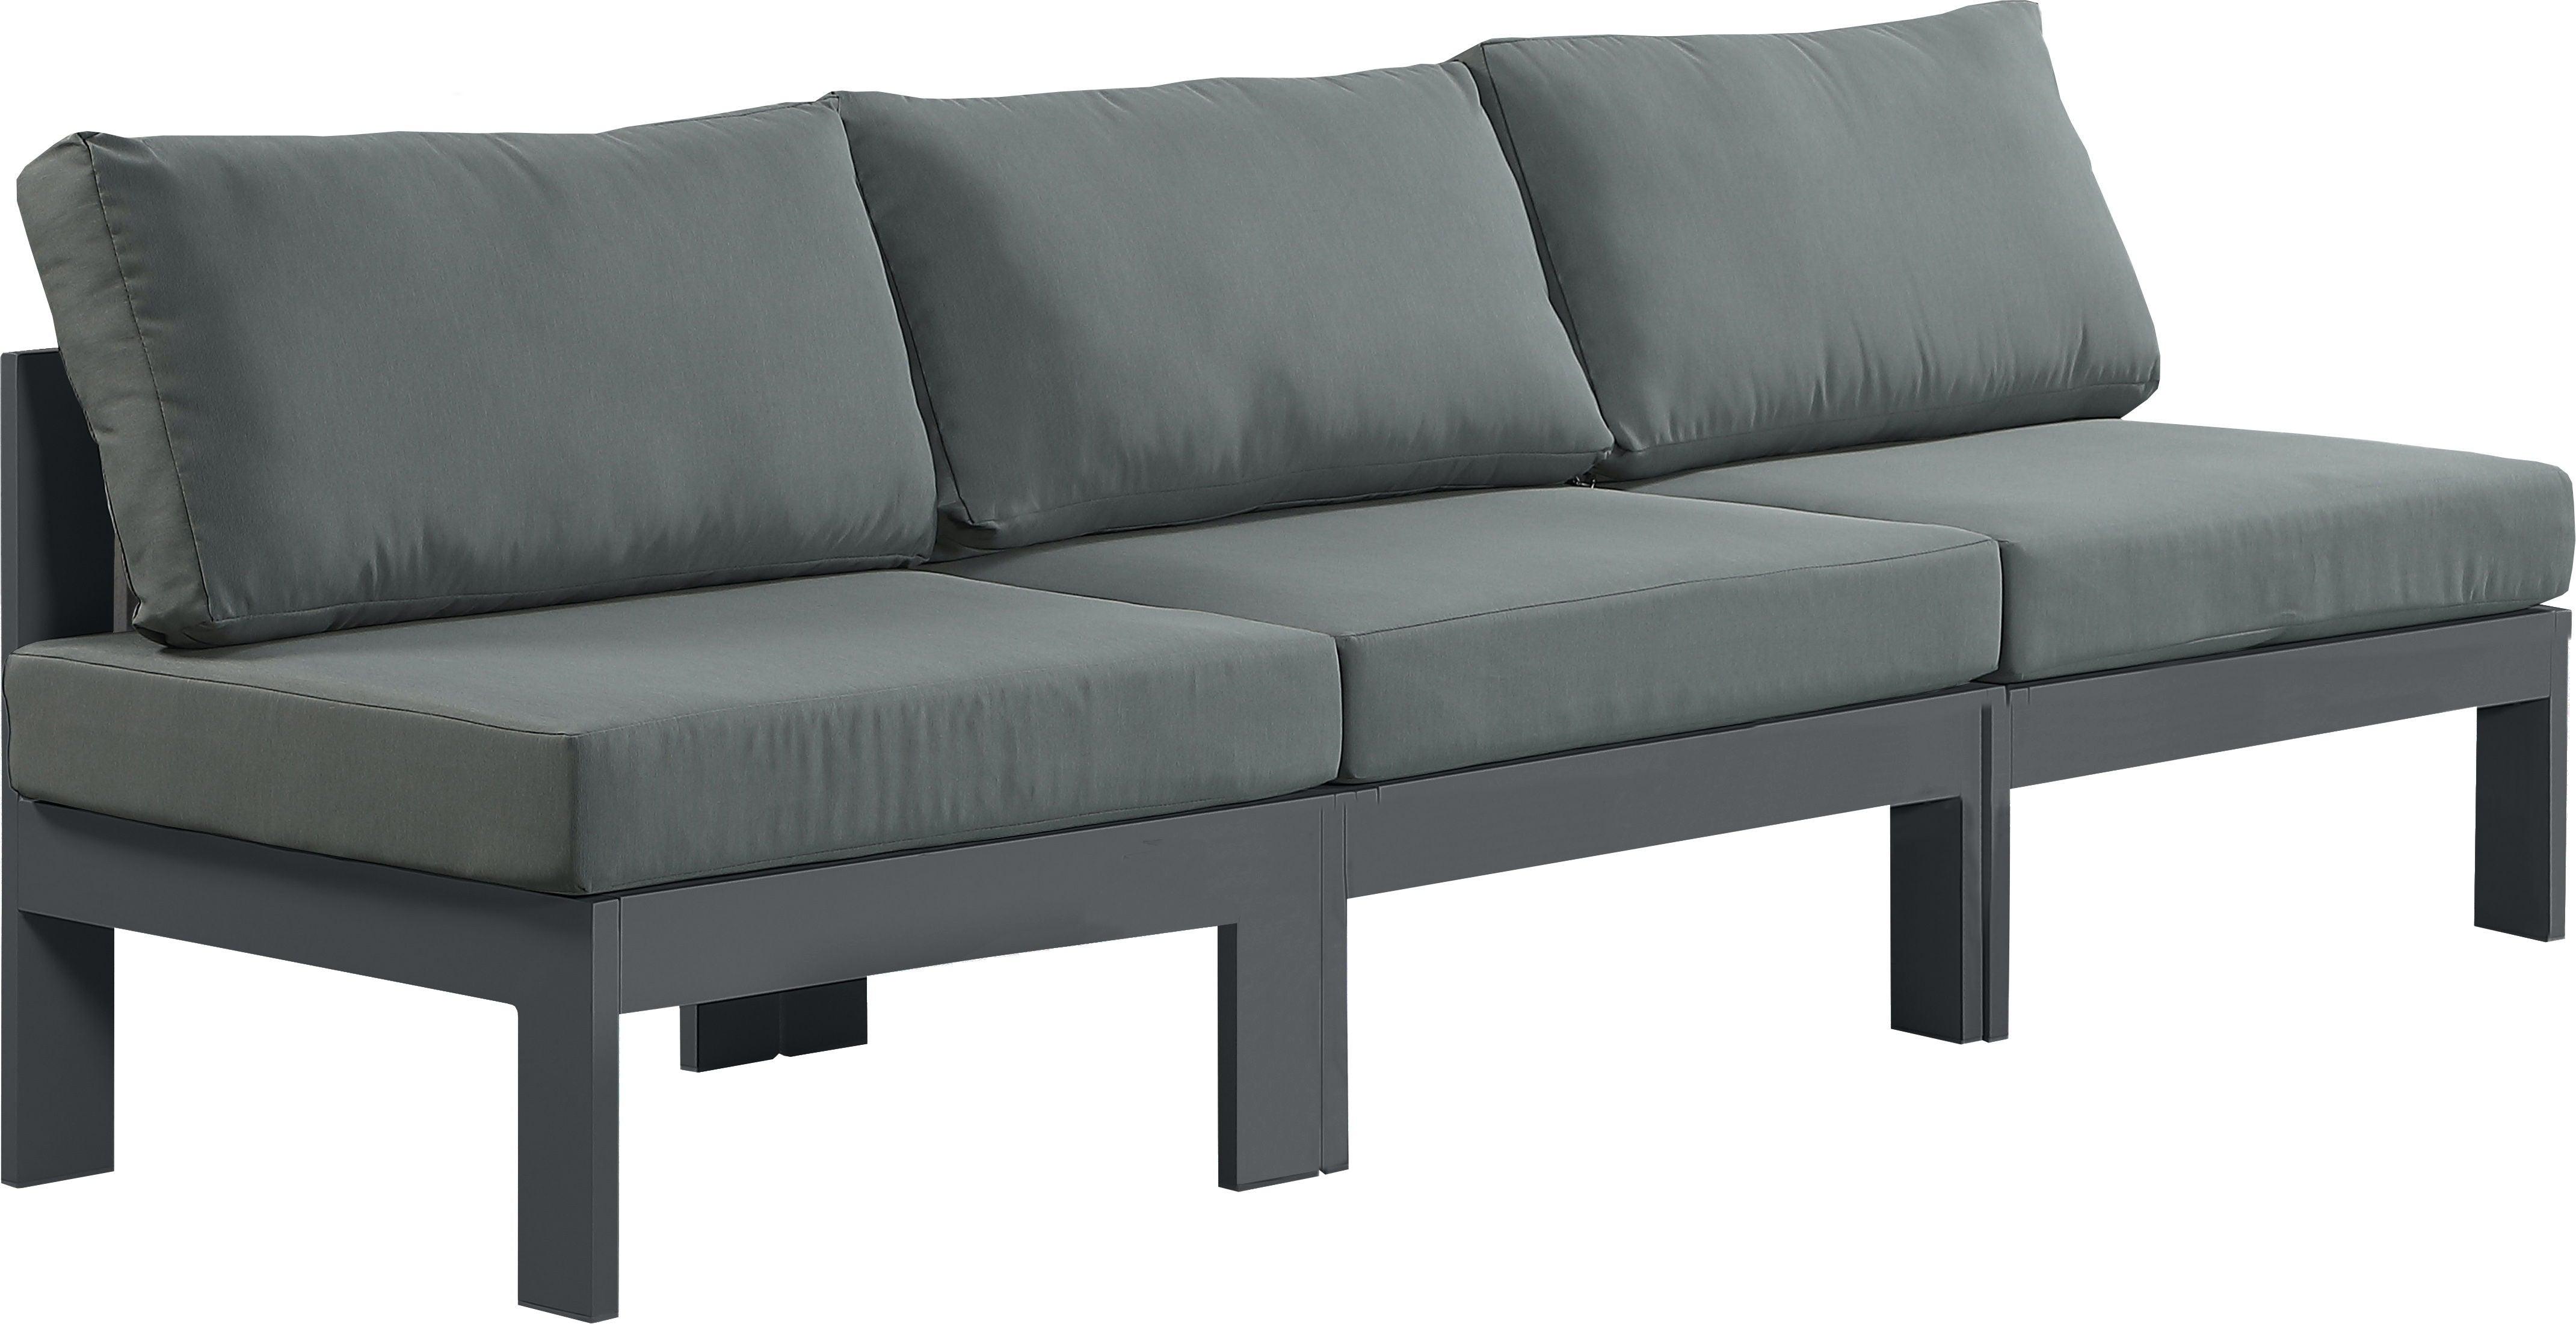 Meridian Furniture - Nizuc - Outdoor Patio Modular Sofa - Grey - 5th Avenue Furniture